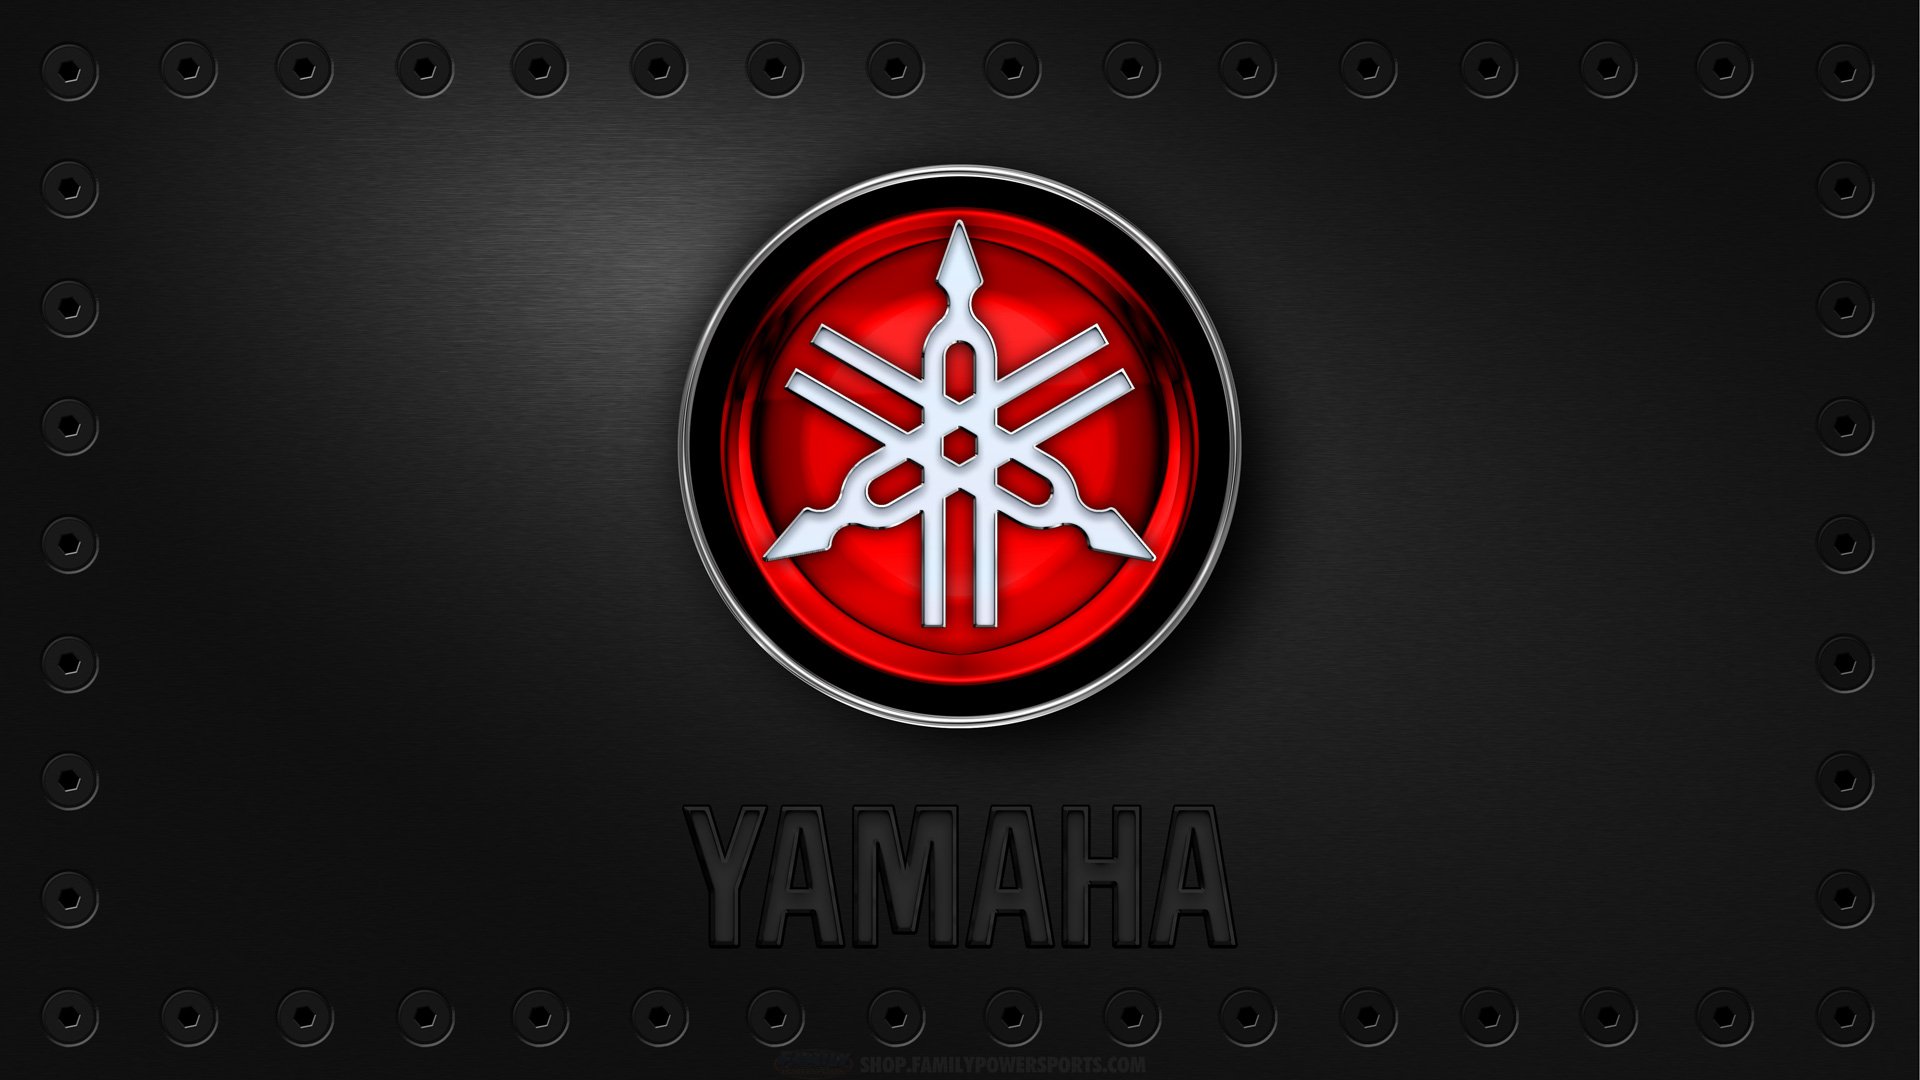 Yamaha Wallpaper - WallpaperSafari